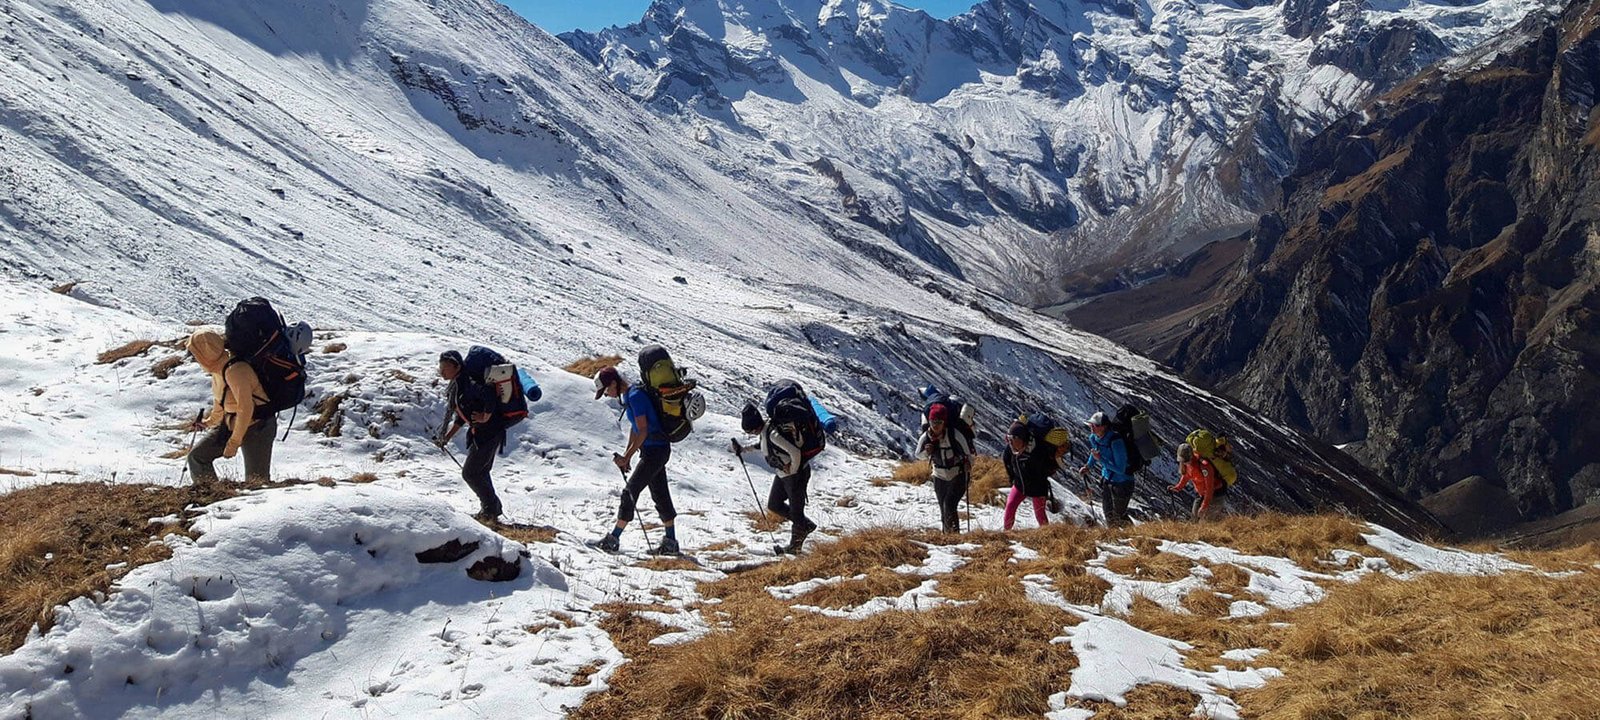 Api Saipal Himal Trek | Remote Trekking Trail In Nepal